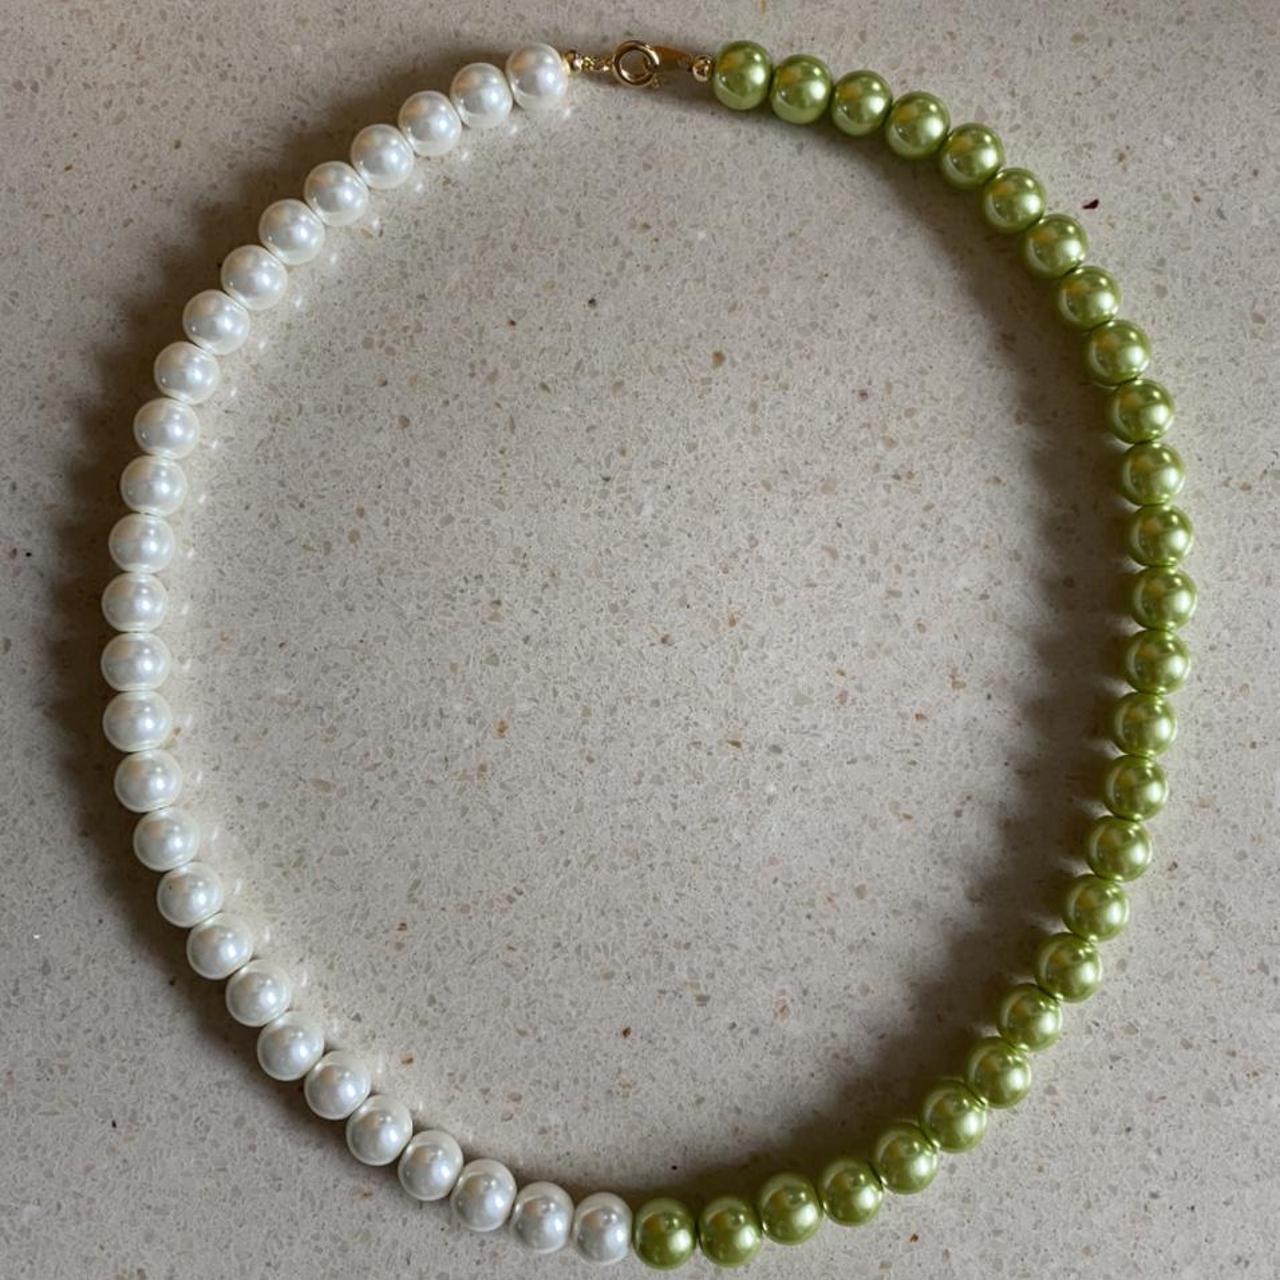 Women's White and Green Jewellery (4)